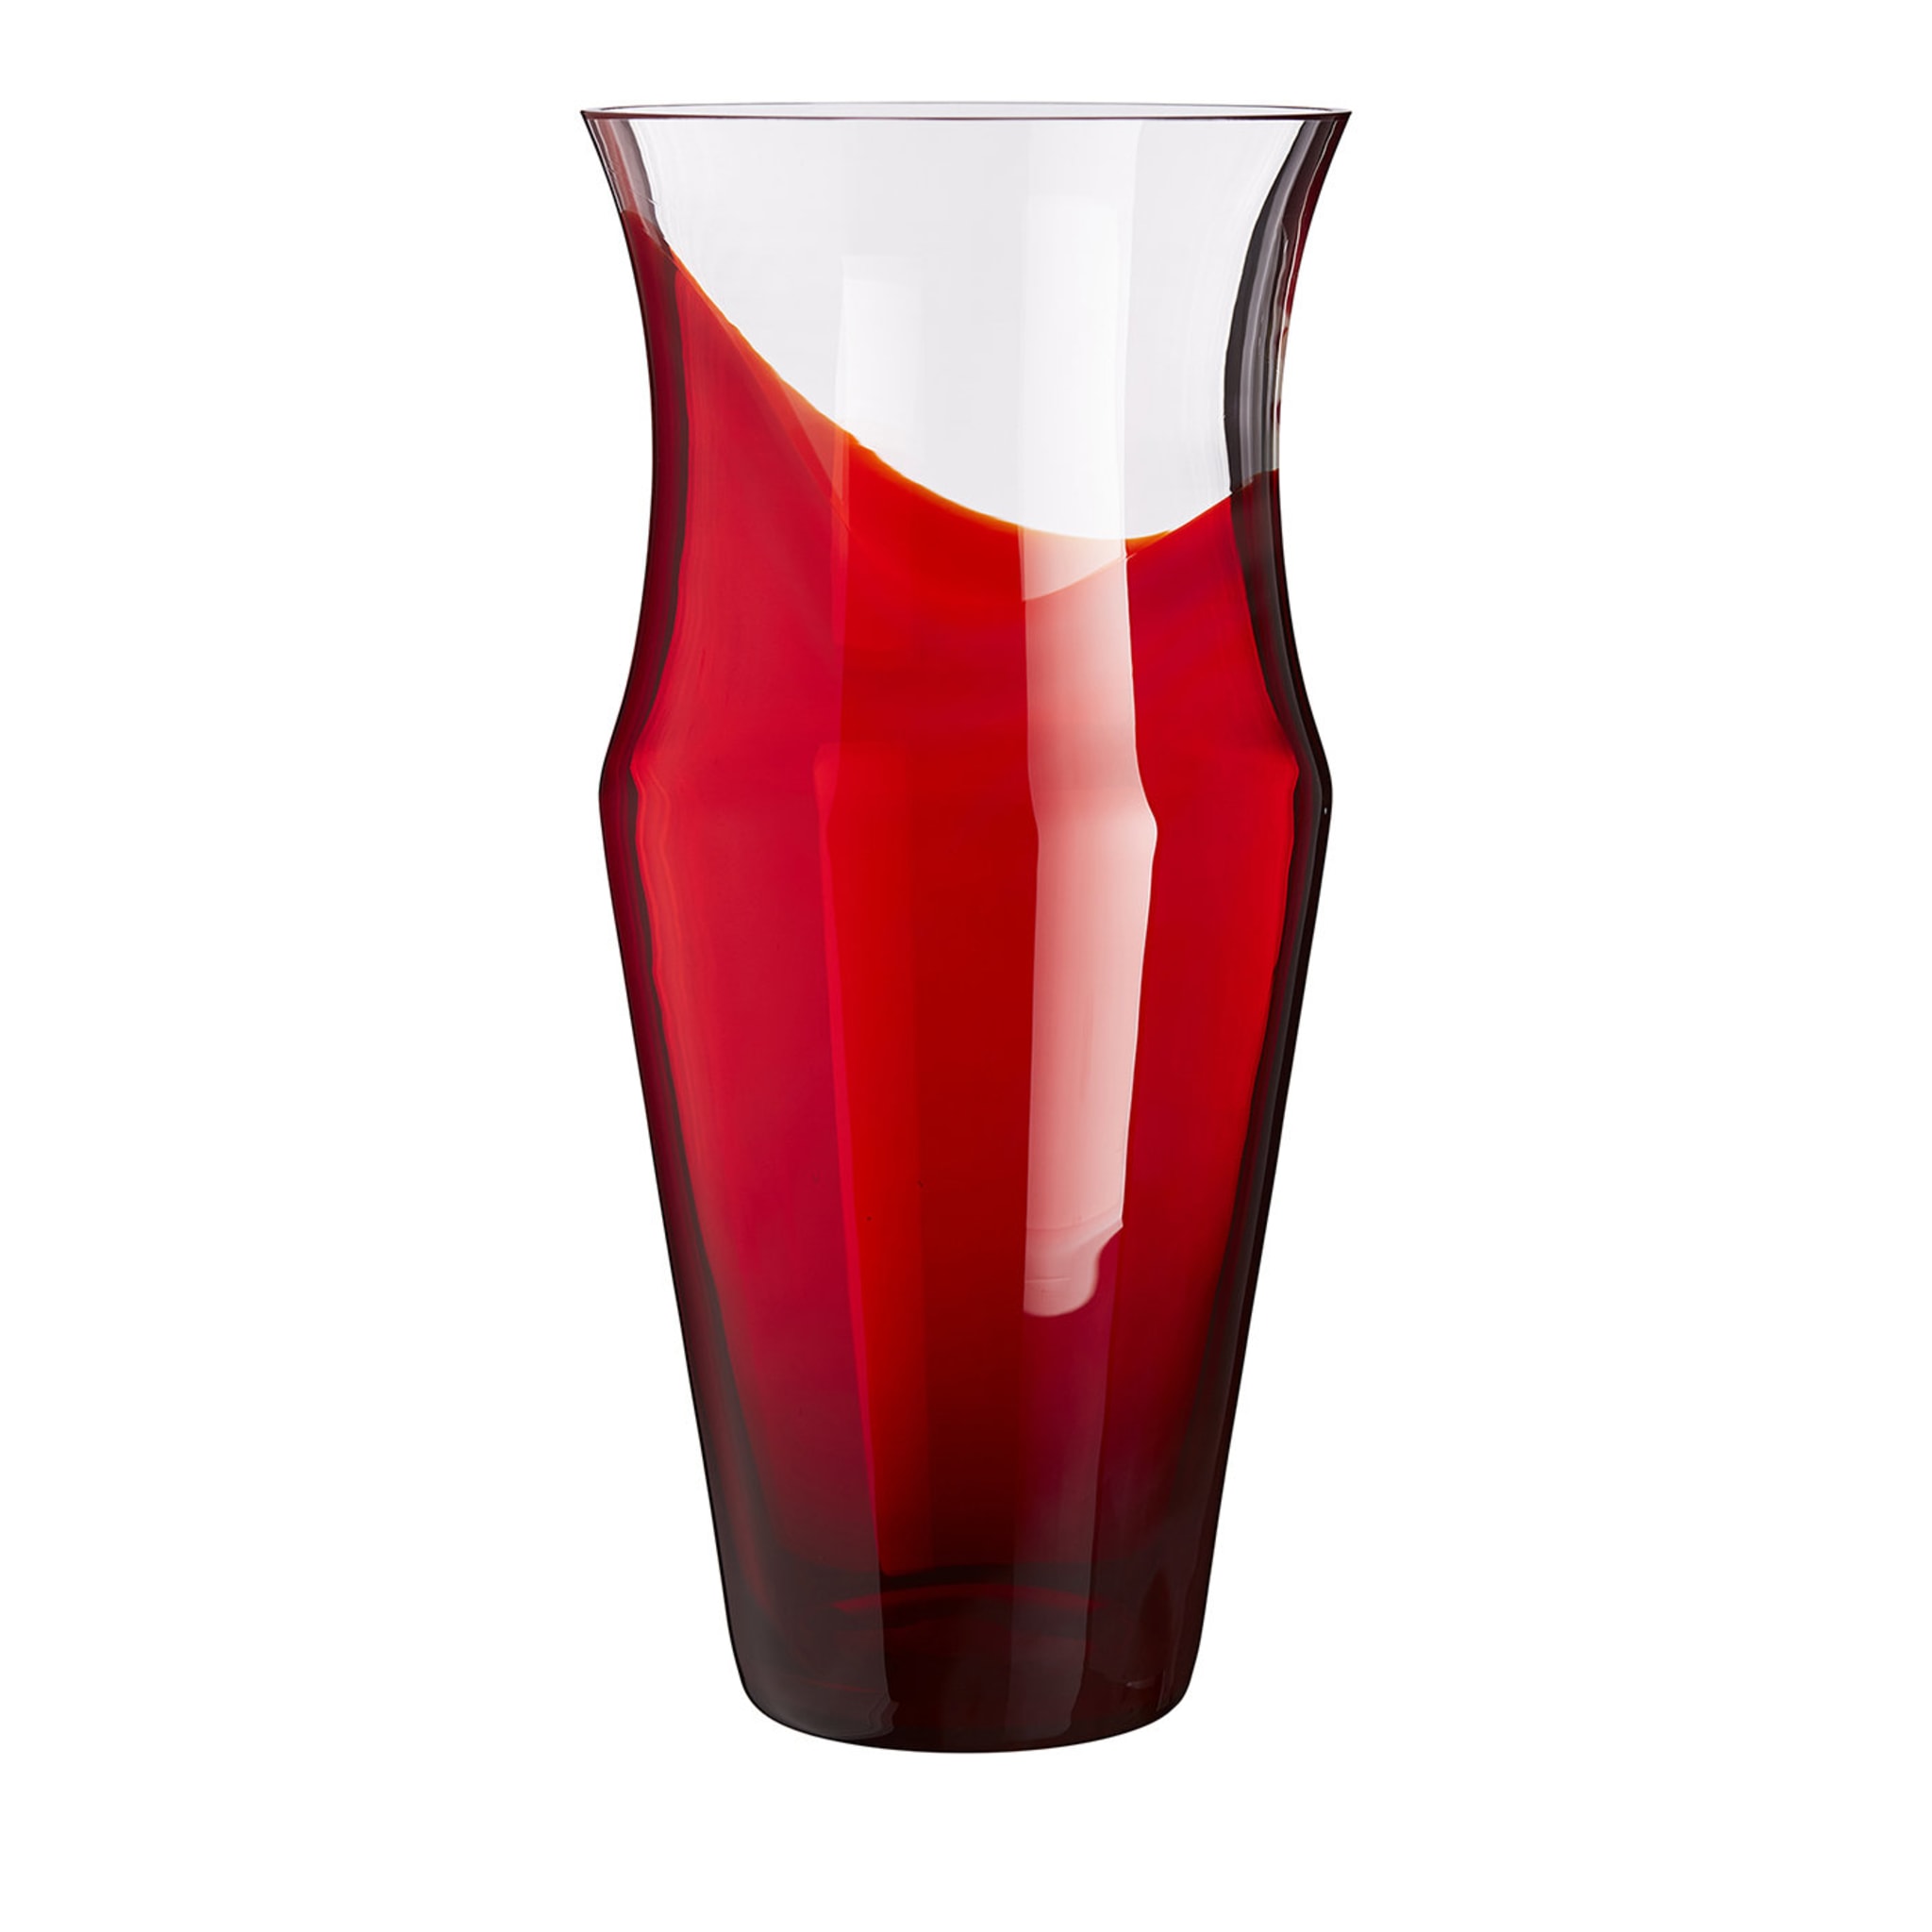 Monocromo Rote Vase - Hauptansicht